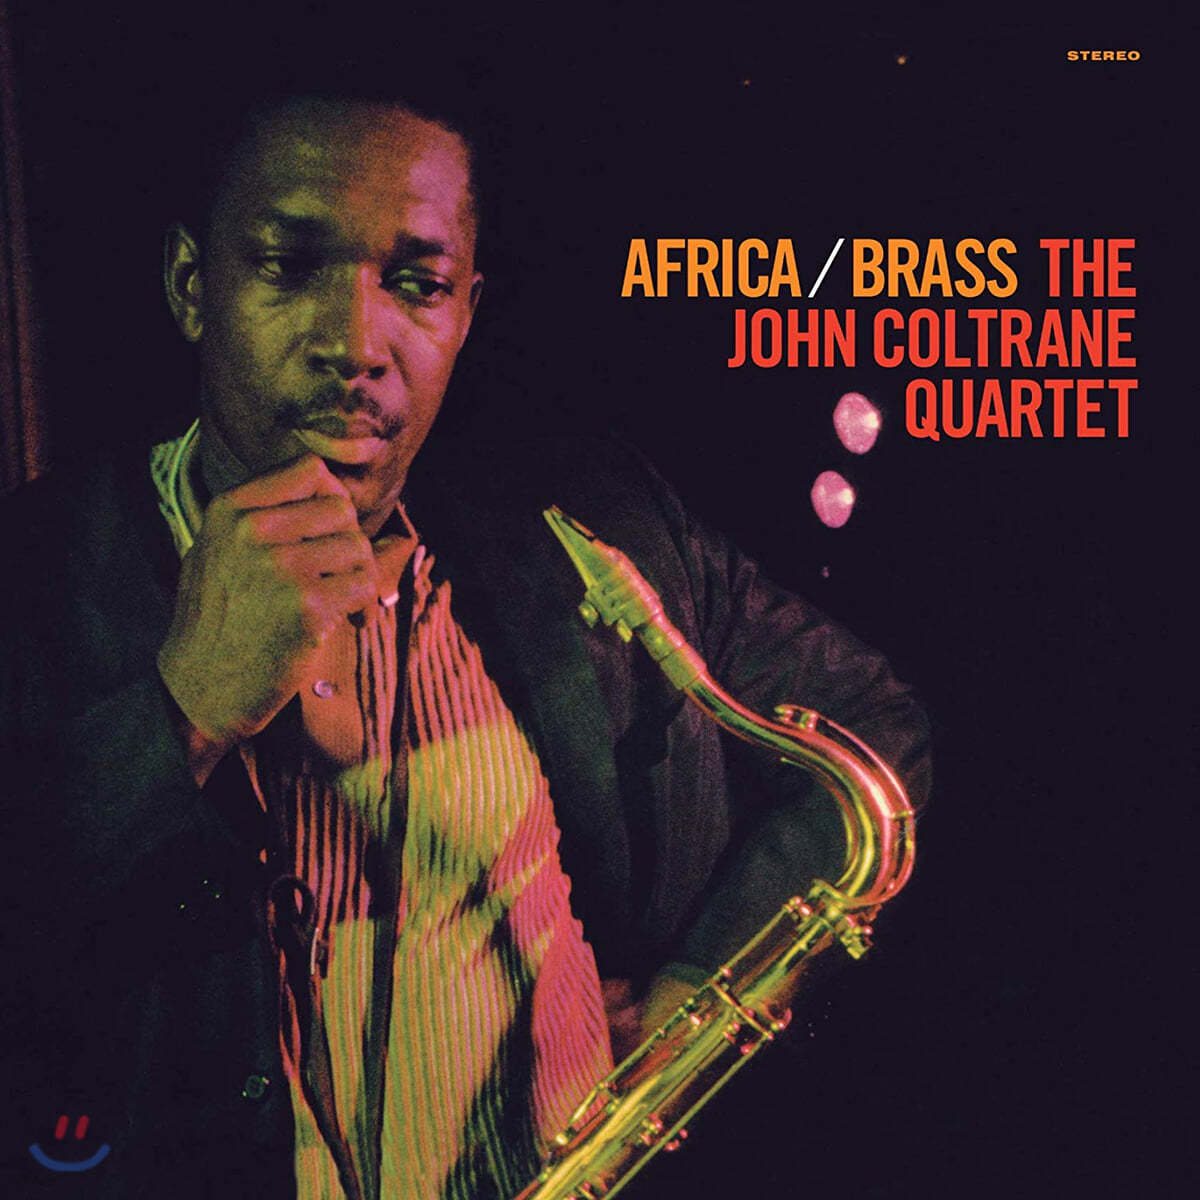 John Coltrane (존 콜트레인) - Africa/Brass [오렌지 컬러 LP]